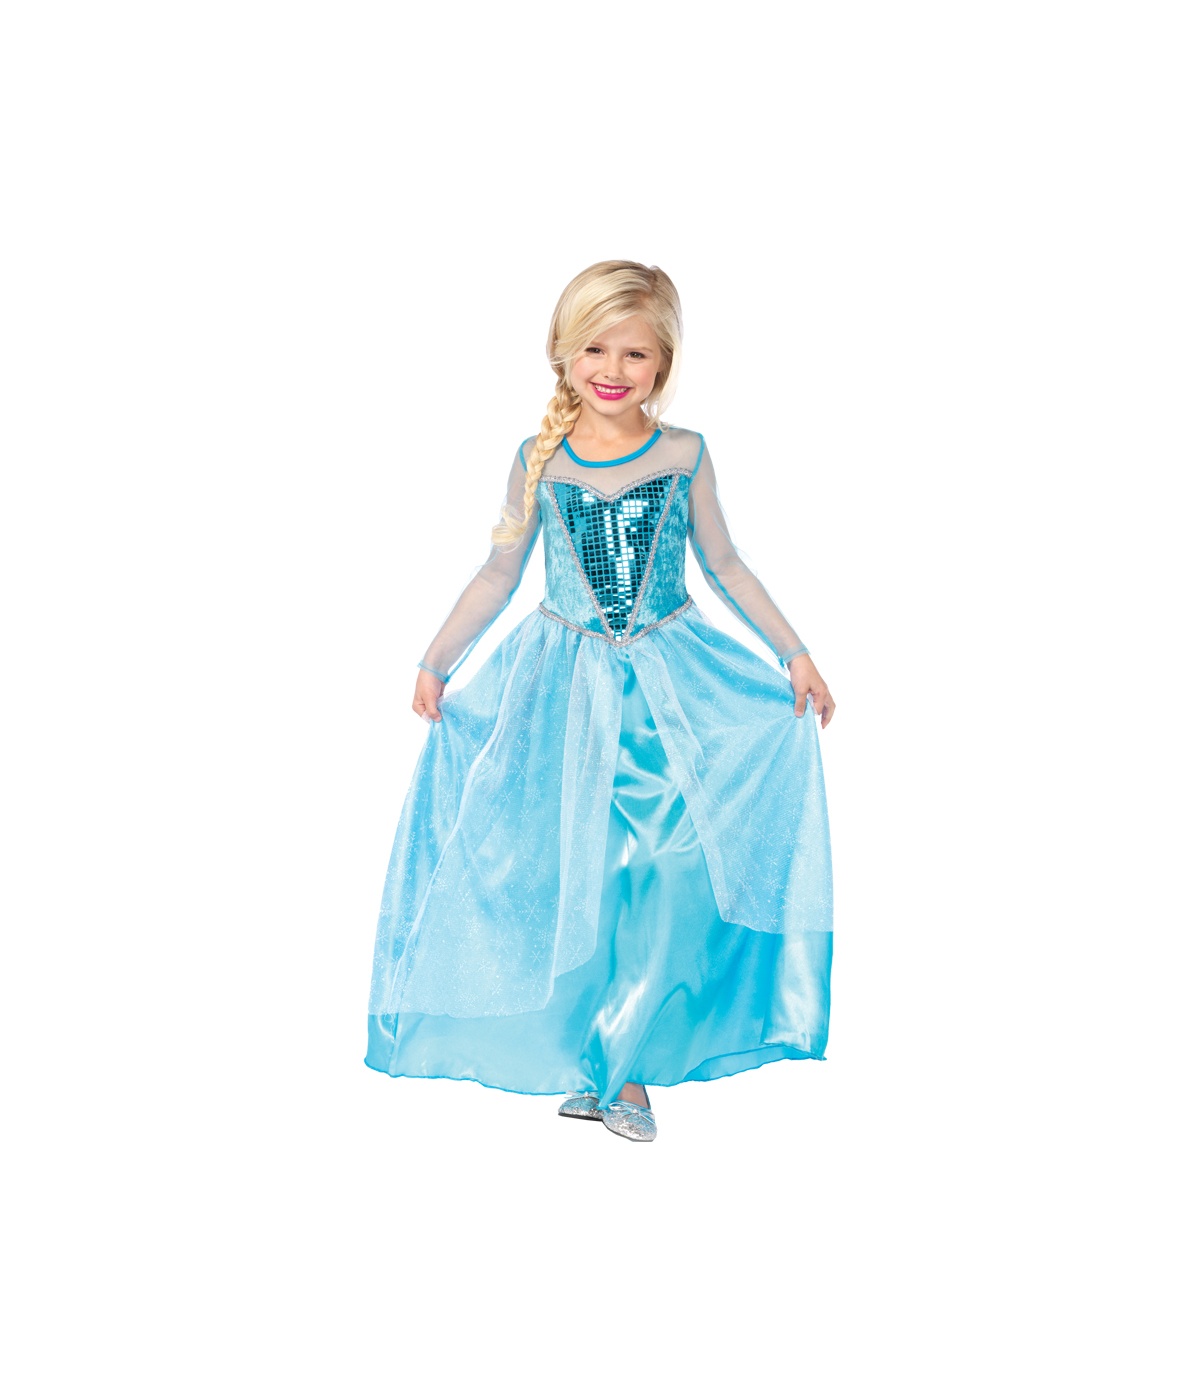  Girls Elsa Frozen Ice Costume